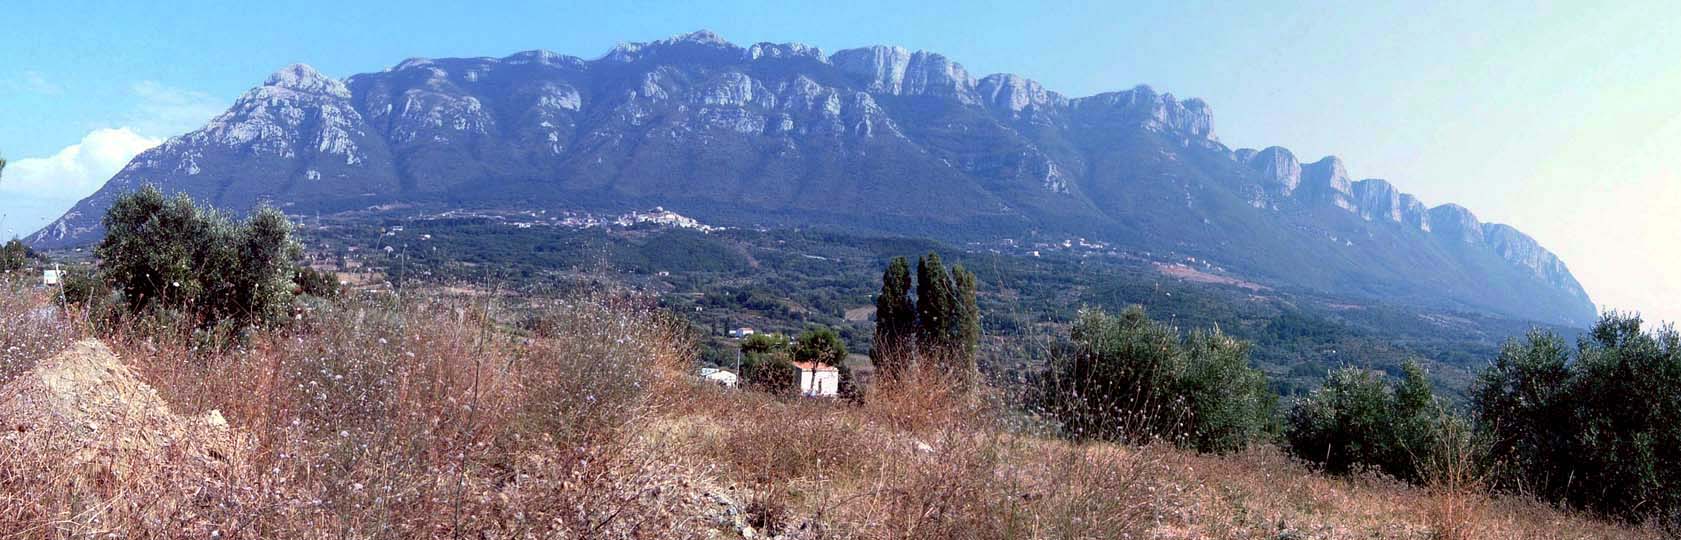 Panorama Cilento - Alburni Mountains